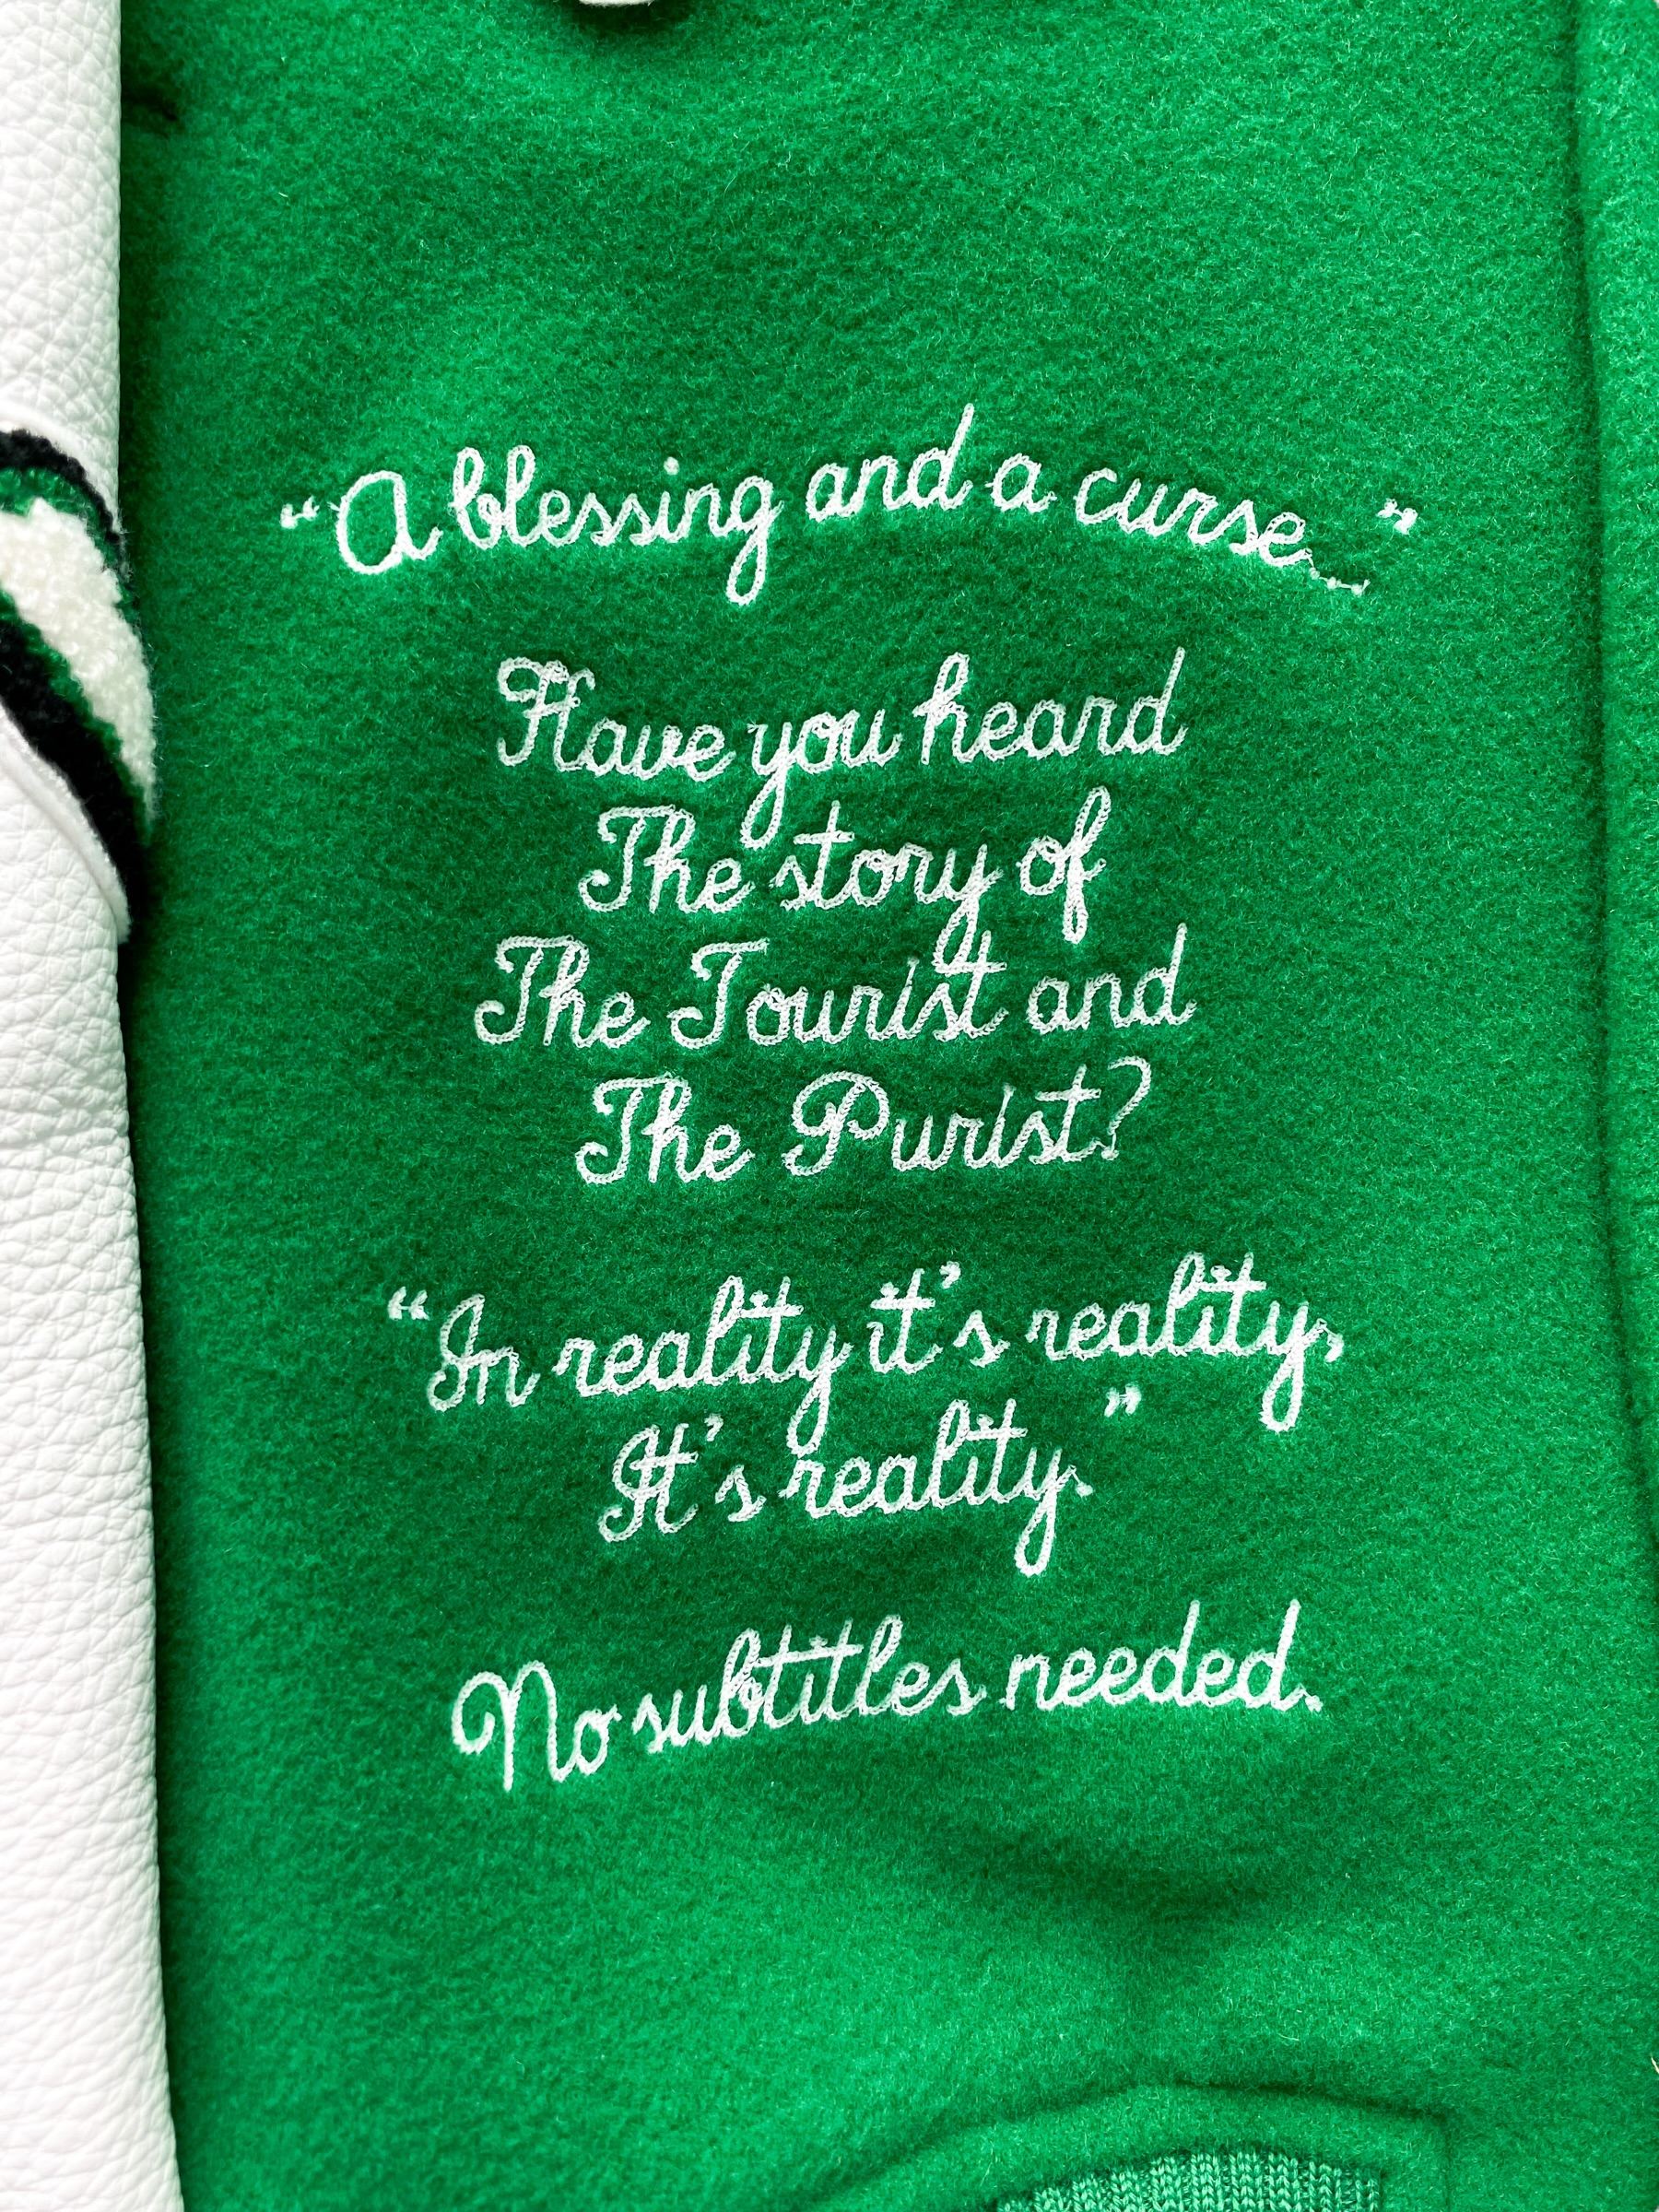 Thegenuineleather Mens Louis Vuitton Green Varsity Jacket 